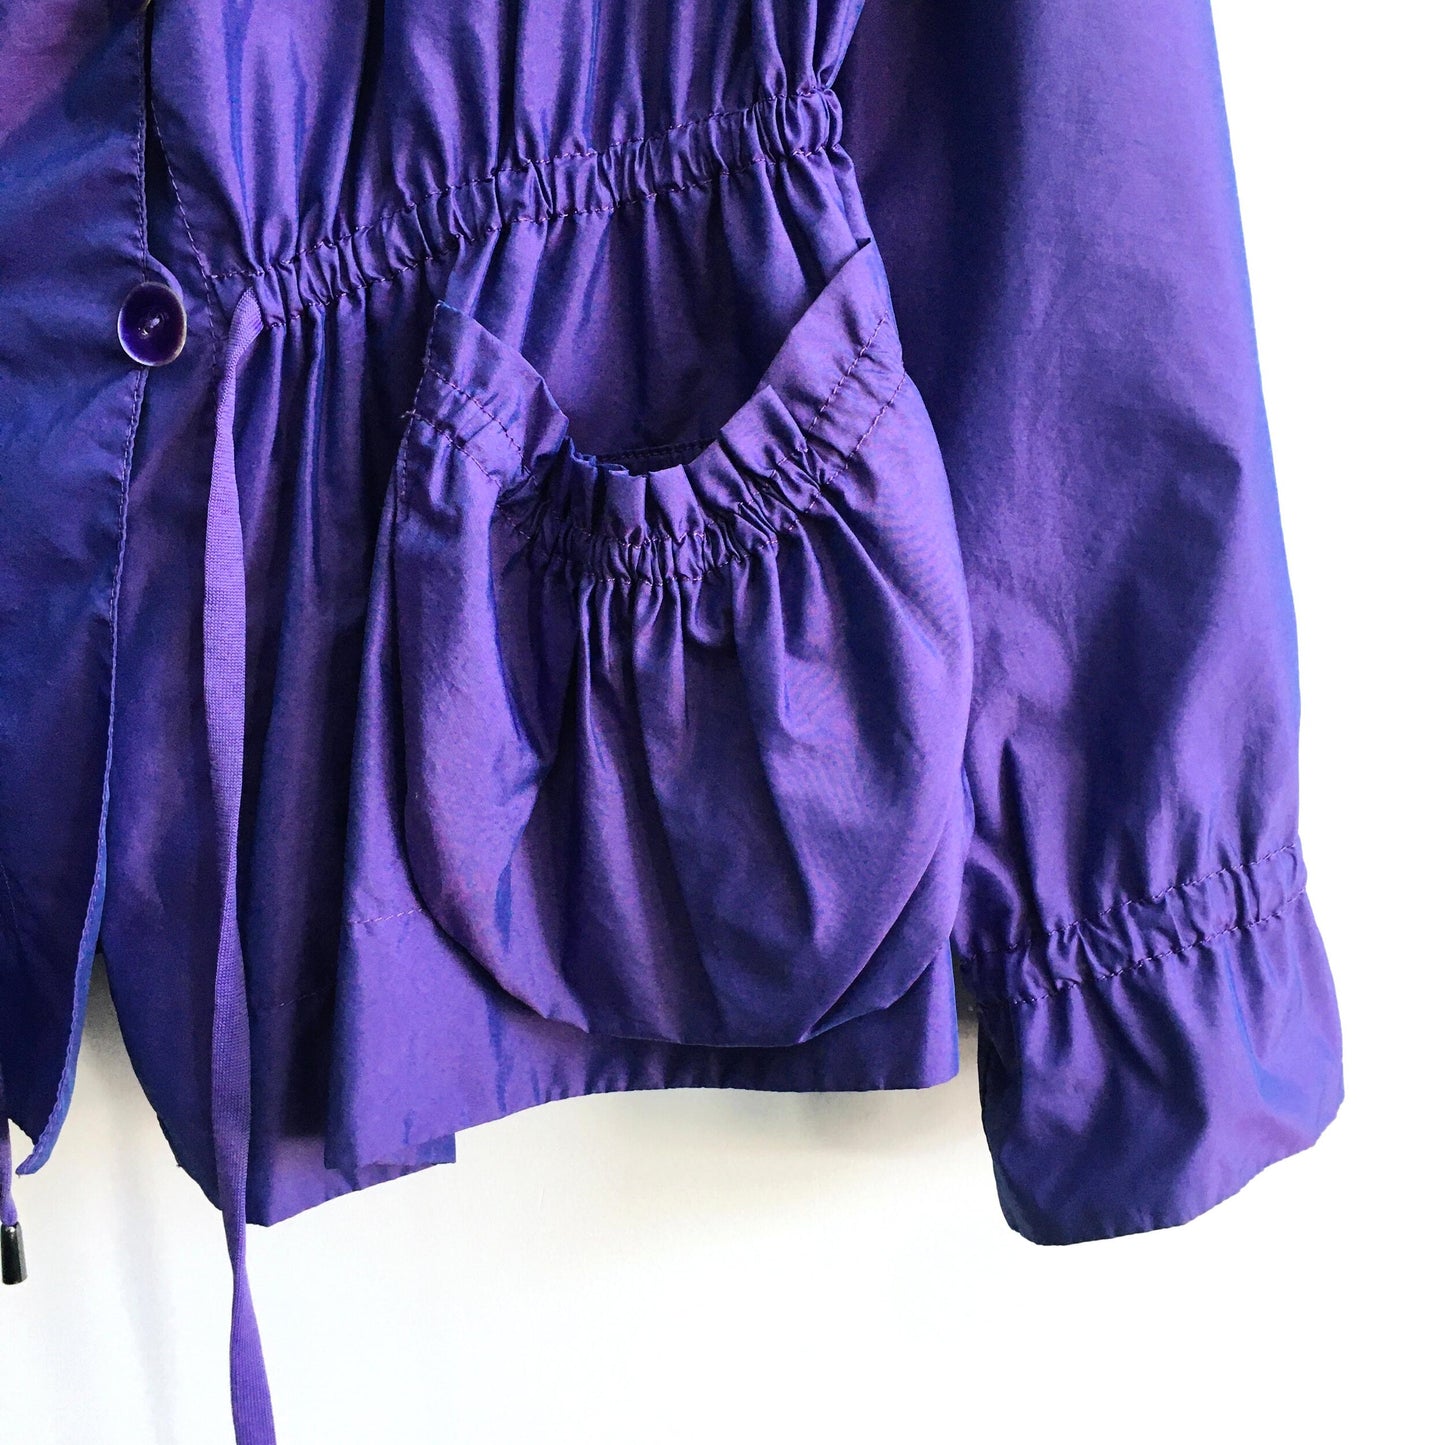 armani collezioni irredescent purple ruched waterproof jacket - size 8